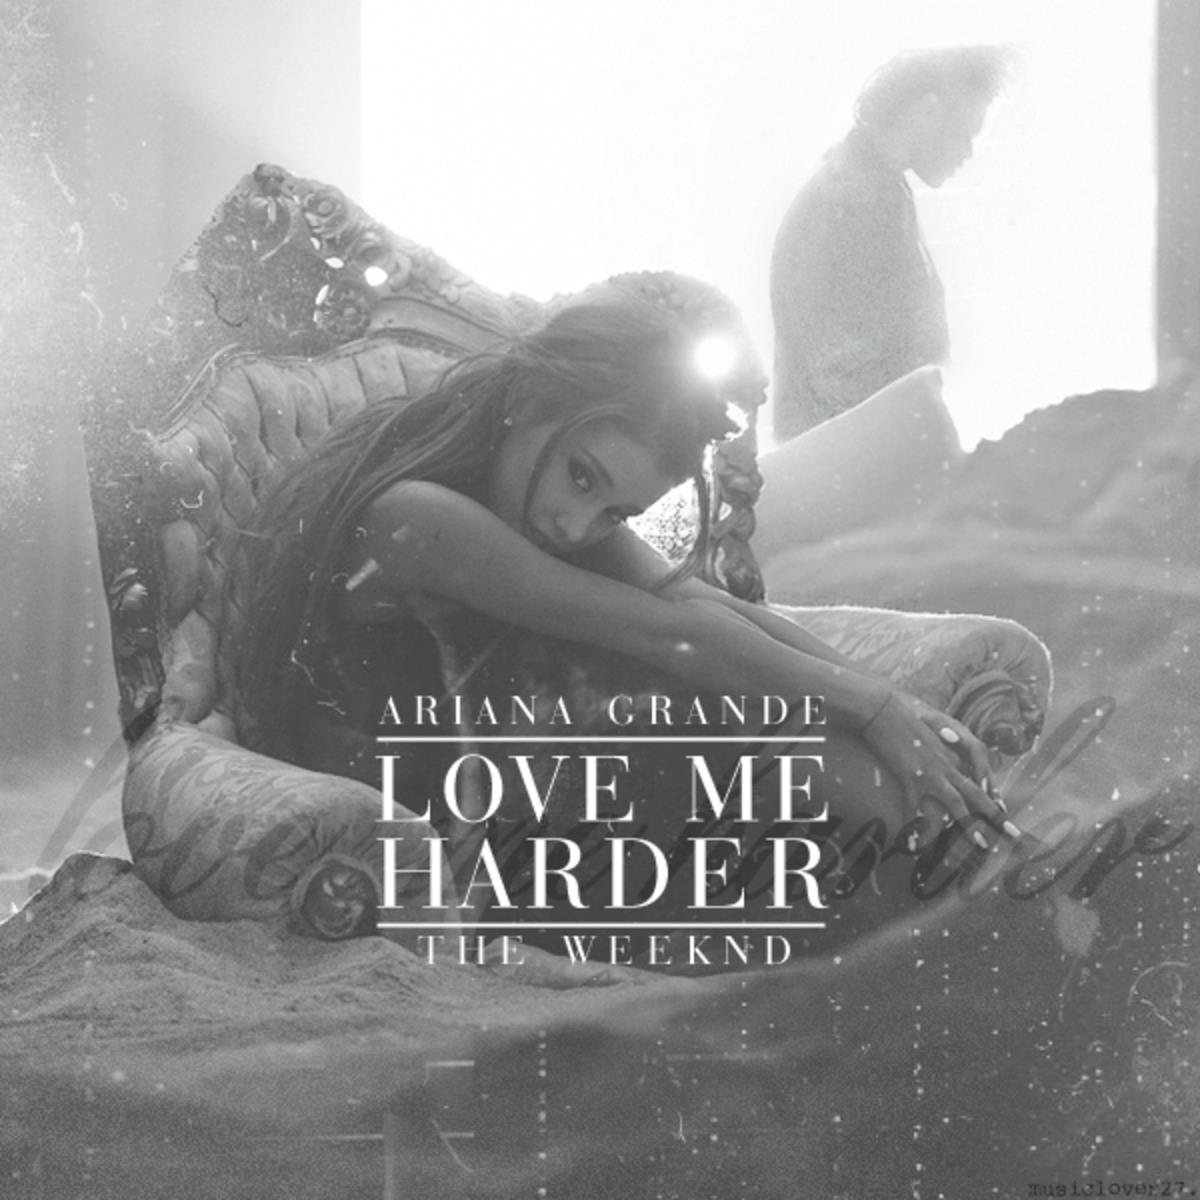 Ariana Grande - Love Me Harder feat The Weeknd